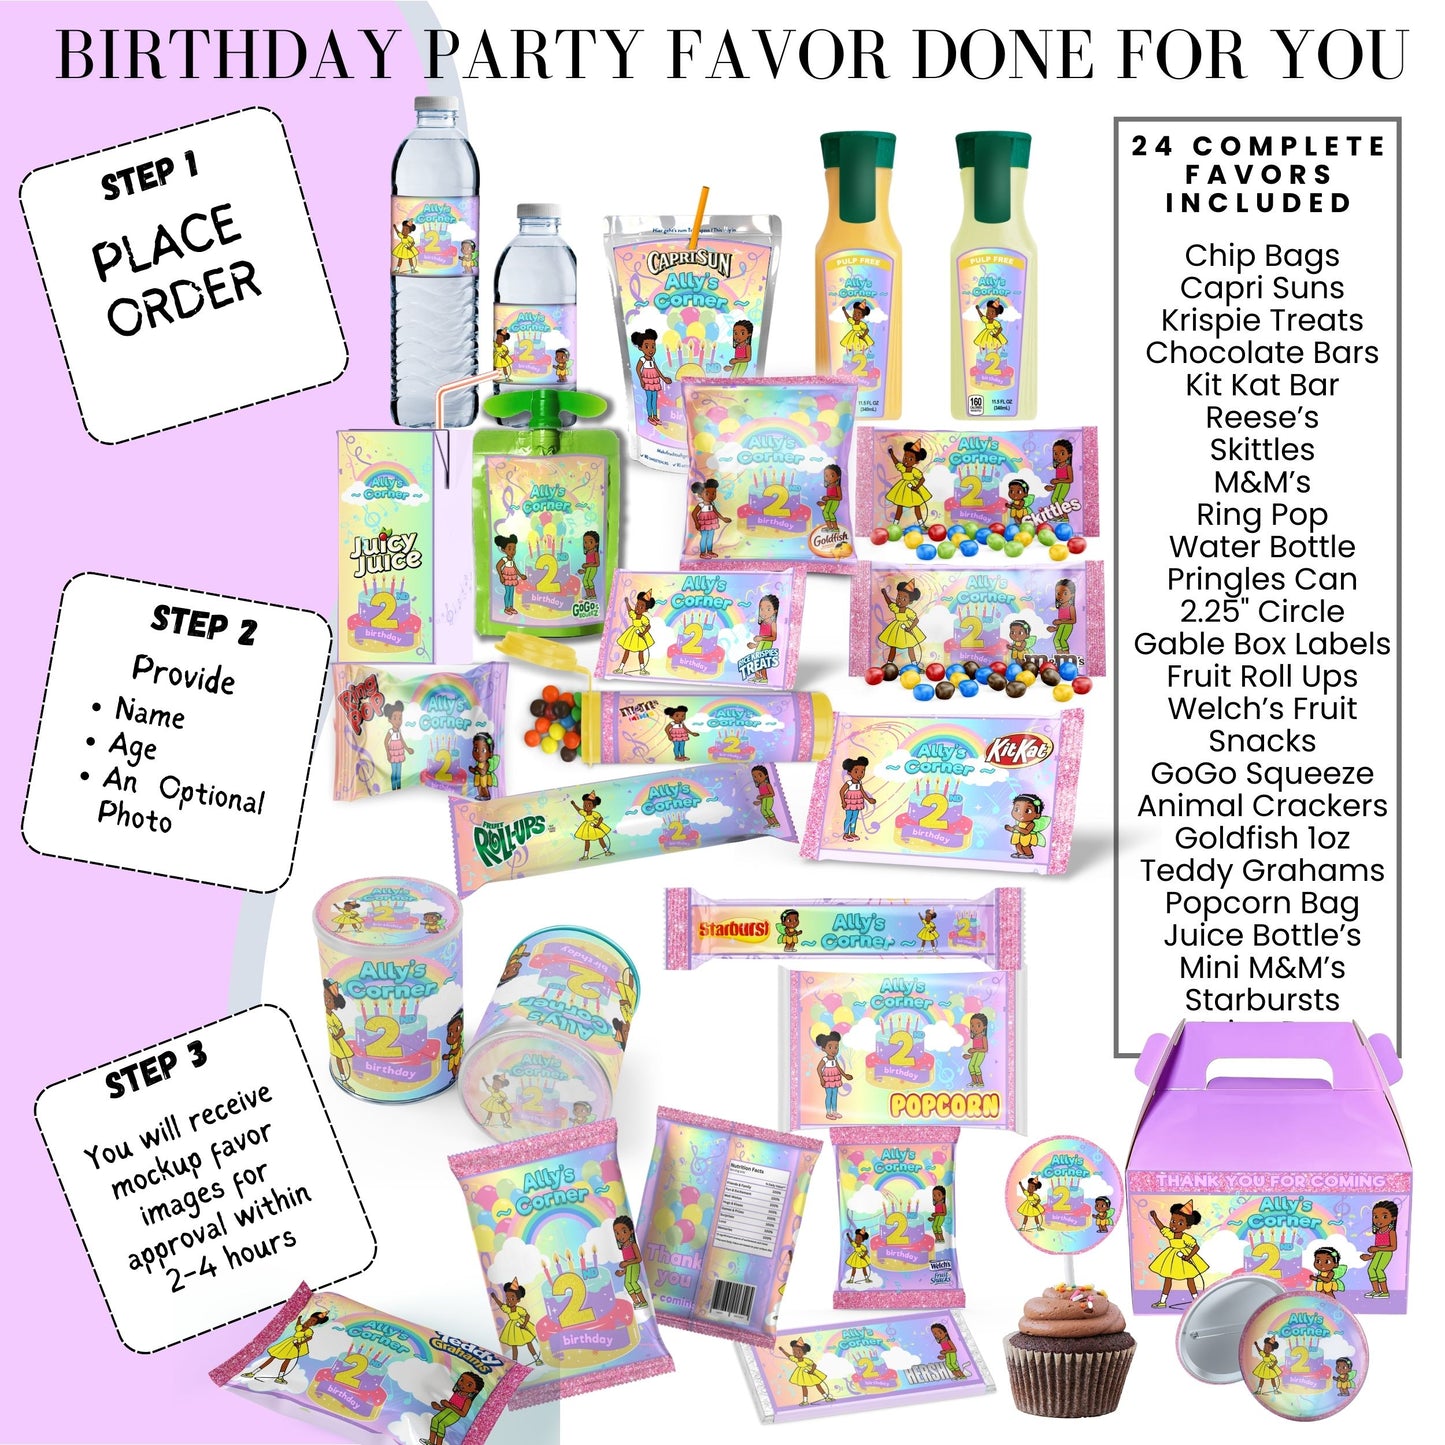 Gracie's Corner Birthday Party Favors DFY